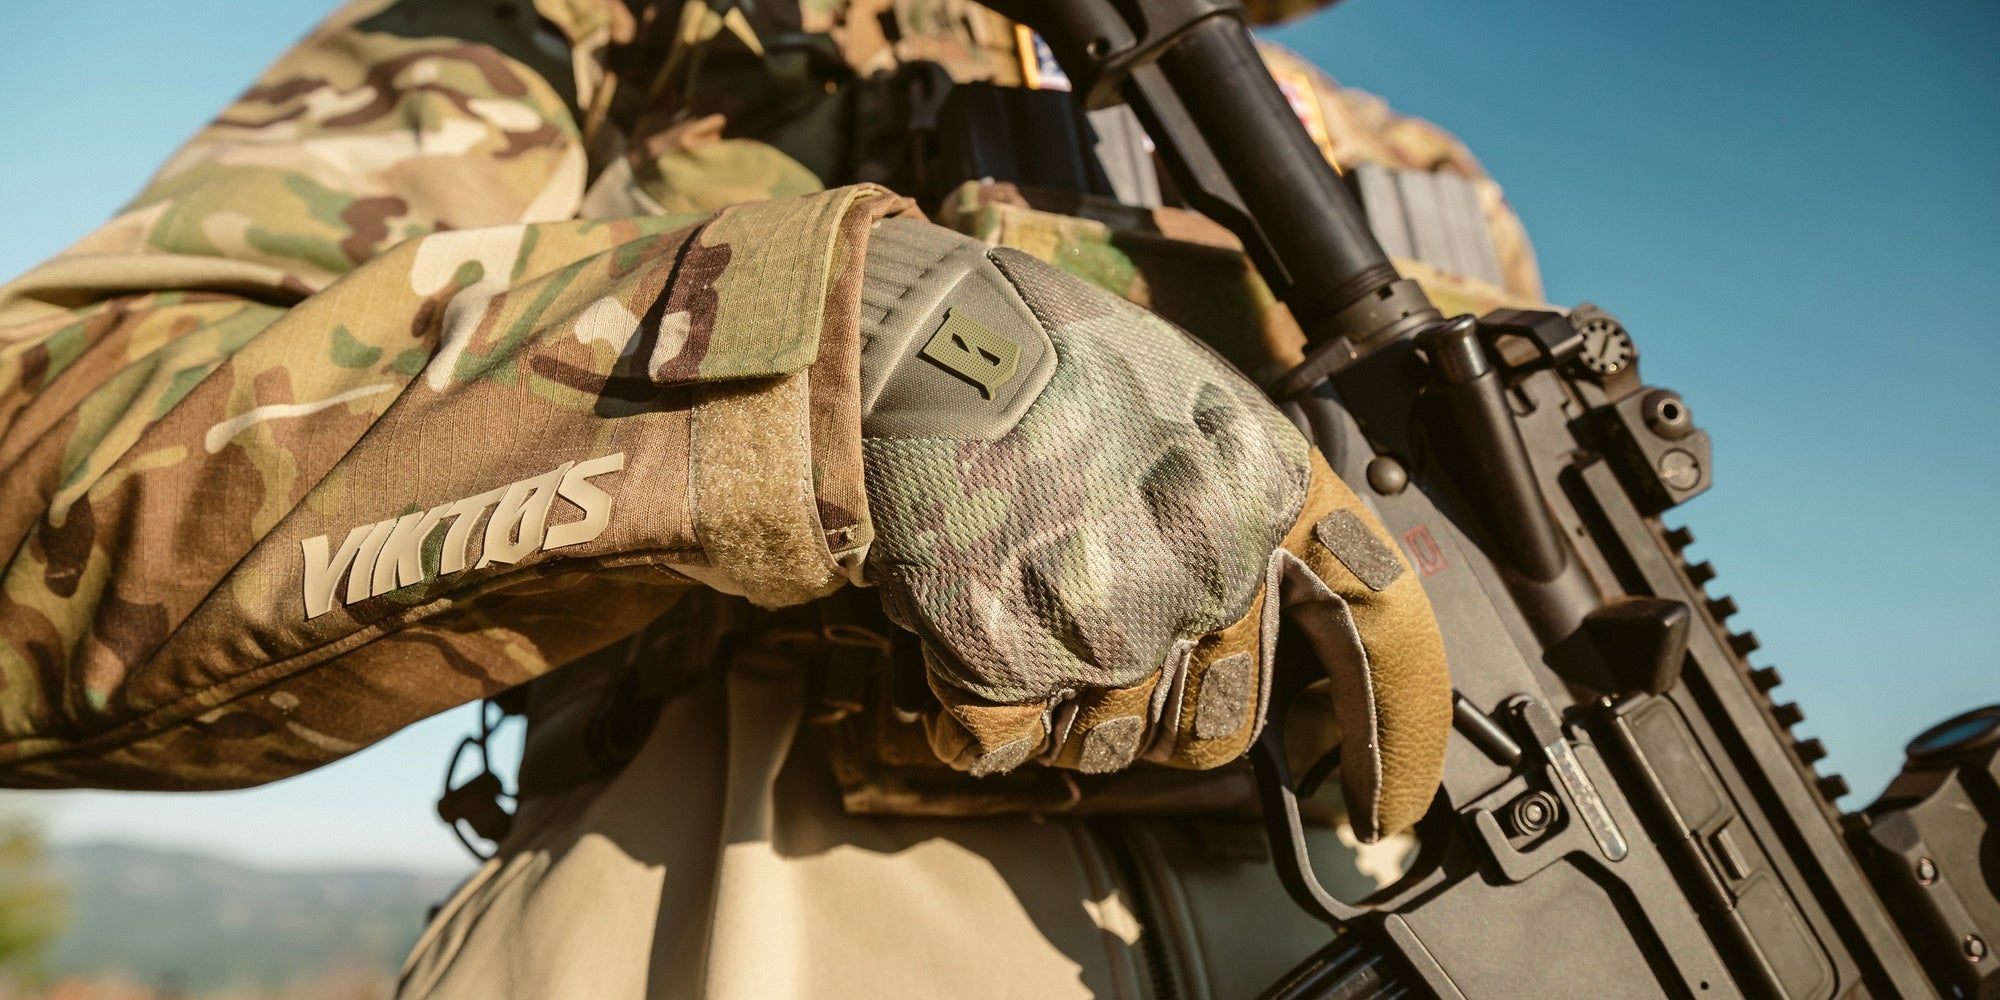 VIKTOS Kadre Kit Gloves Ranger Gloves VIKTOS Tactical Gear Supplier Tactical Distributors Australia